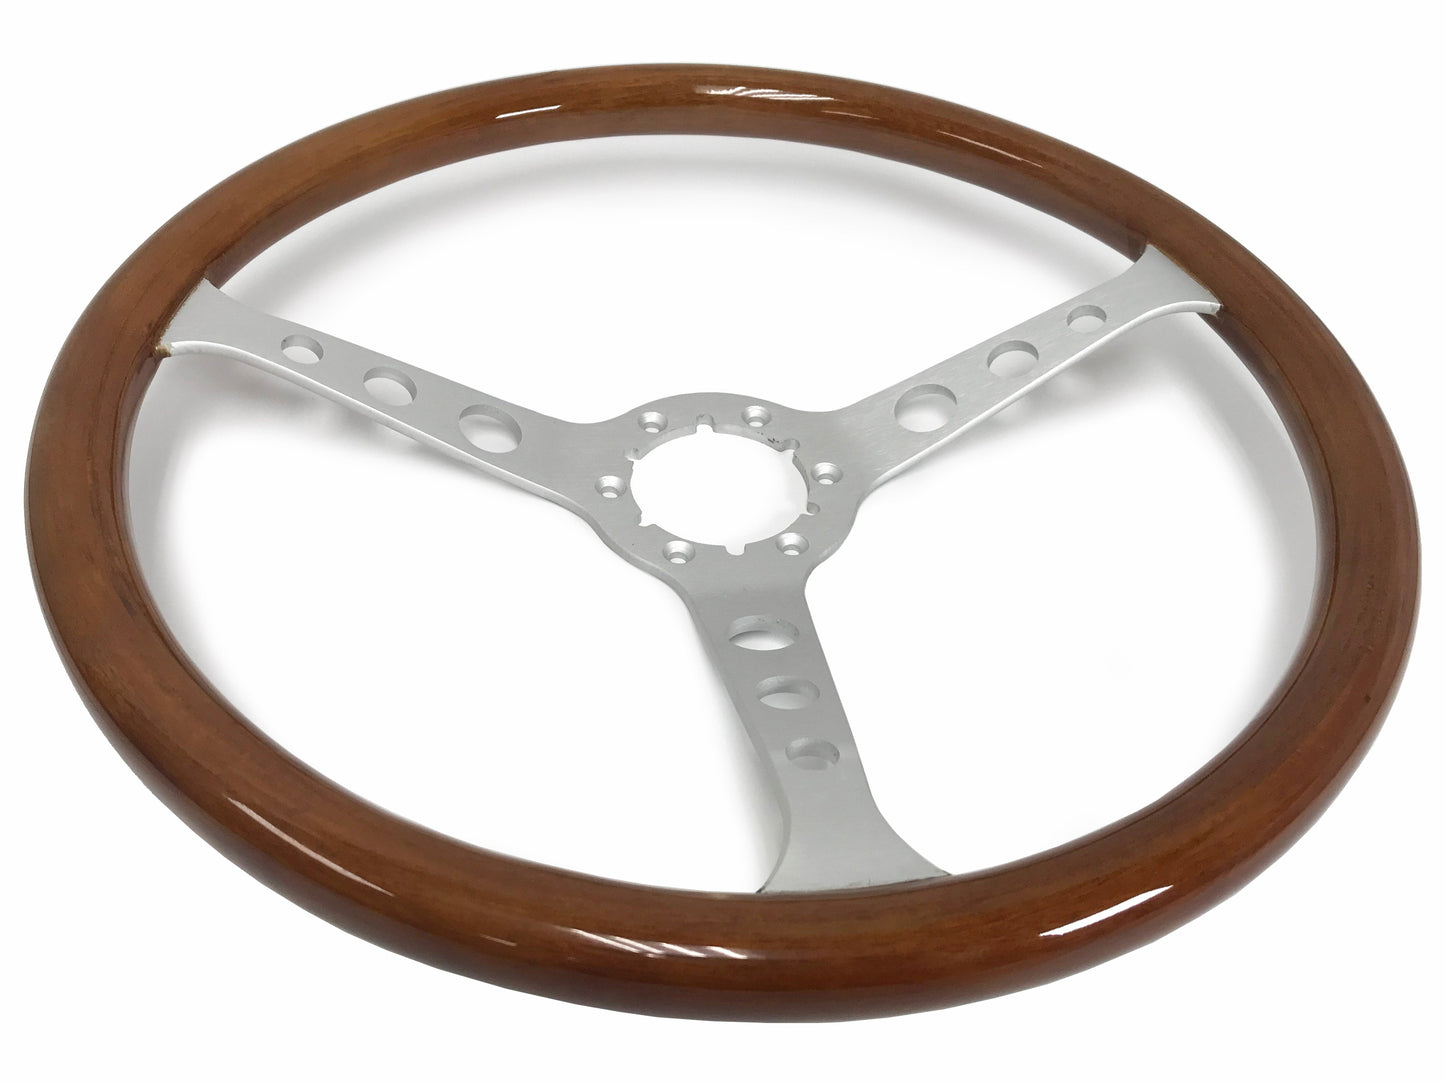 1999+ Volkswagen Golf Steering Wheel Kit | Classic Wood | ST3578